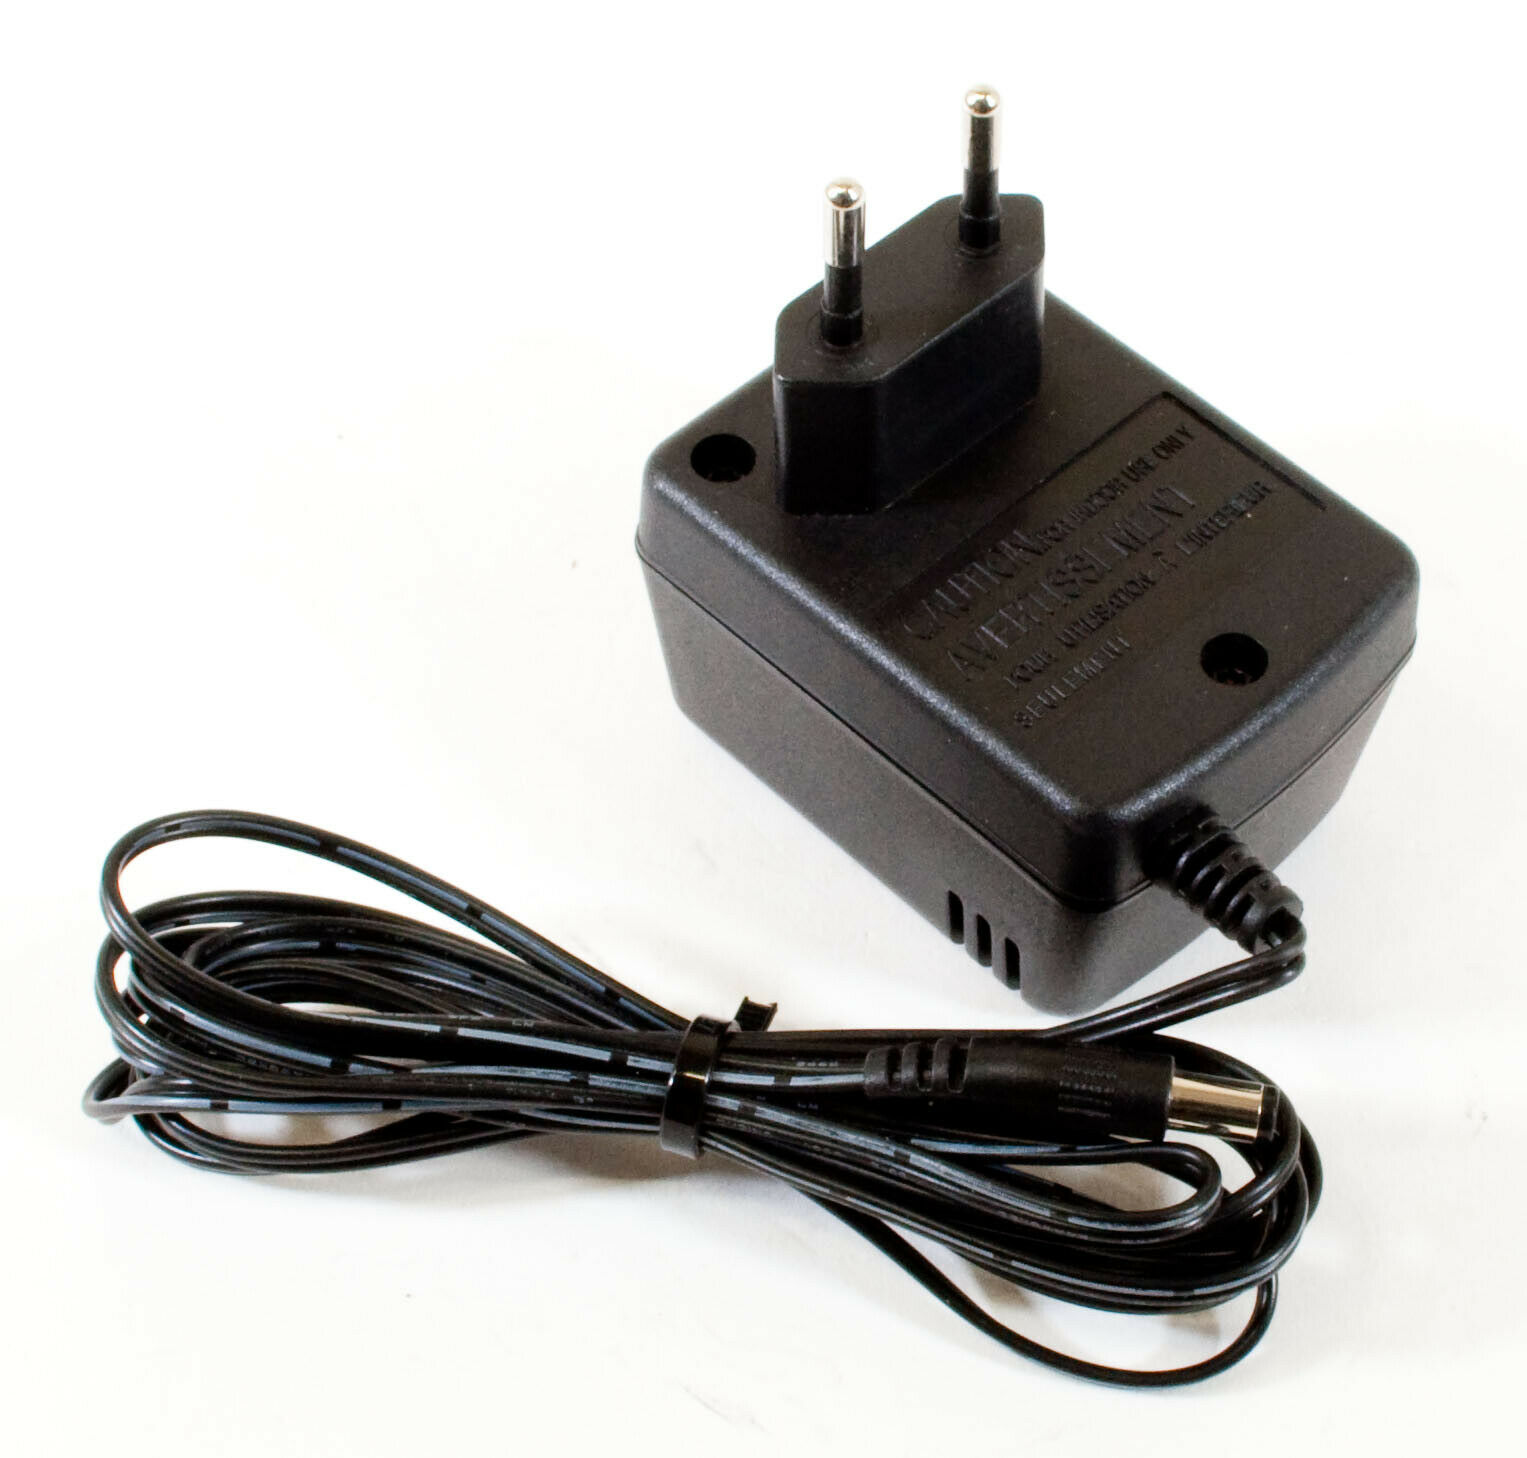 12V Mains AC/DC Adaptor for Makita DMR109 DAB Job Site Radio Power Supply Lead Color: Black Input voltage: AC 100-240Vo